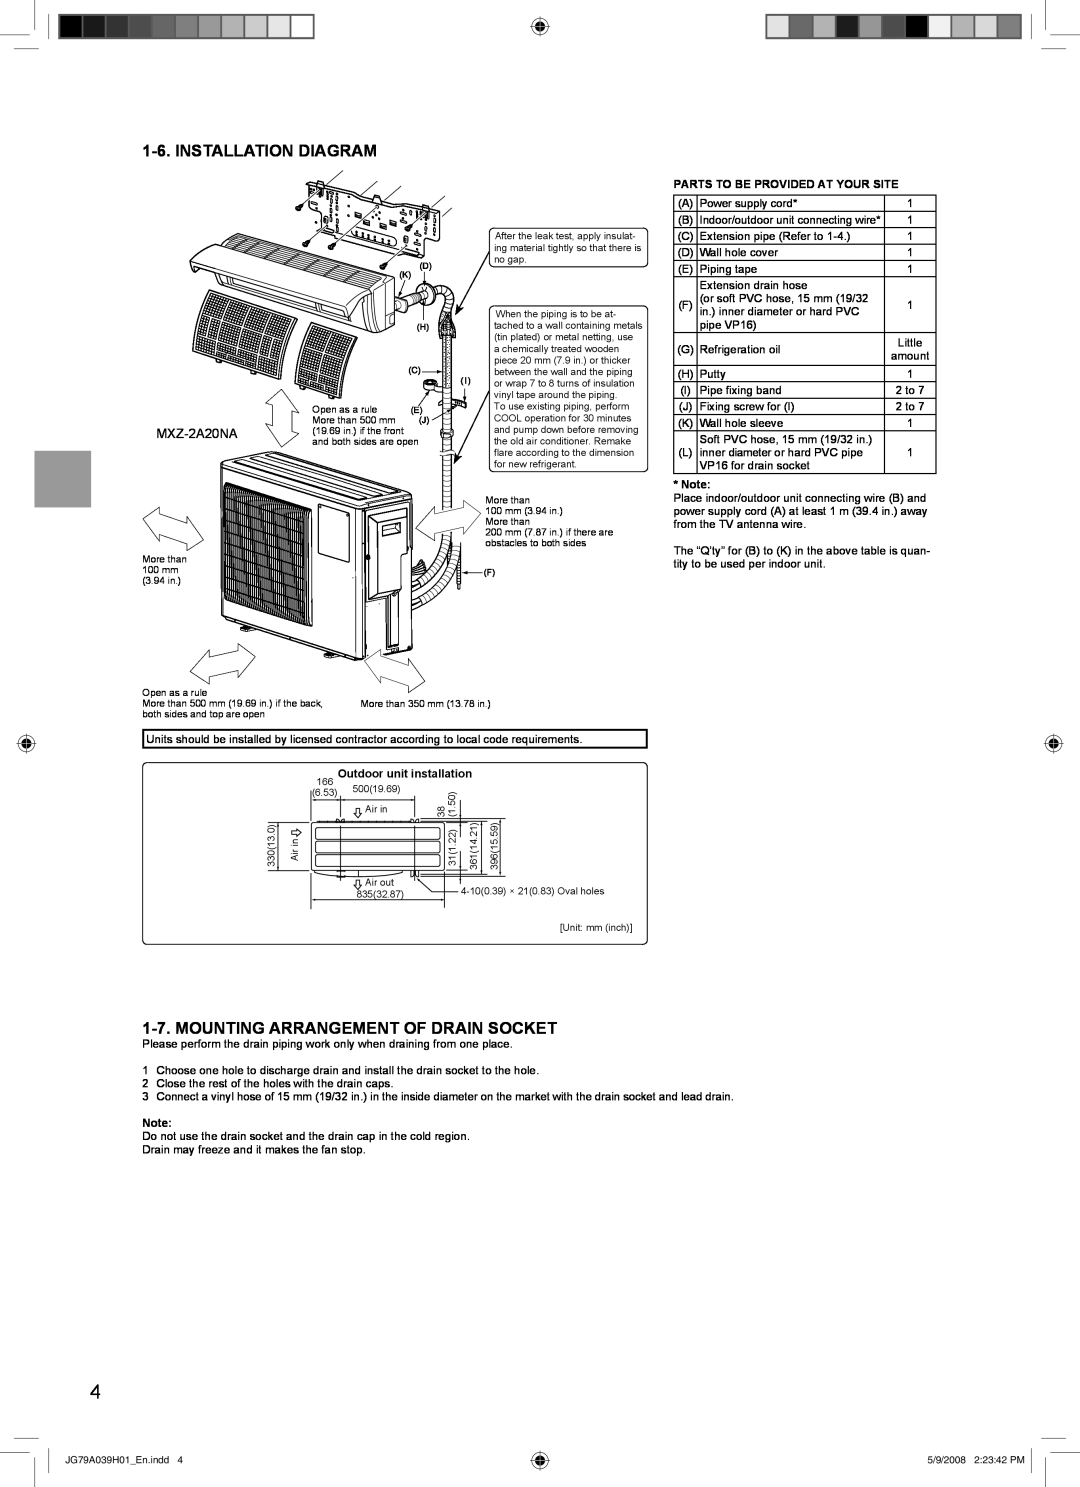 Mitsubishi Electronics MXZ-2A20NA installation manual Installation Diagram, Mounting Arrangement Of Drain Socket 